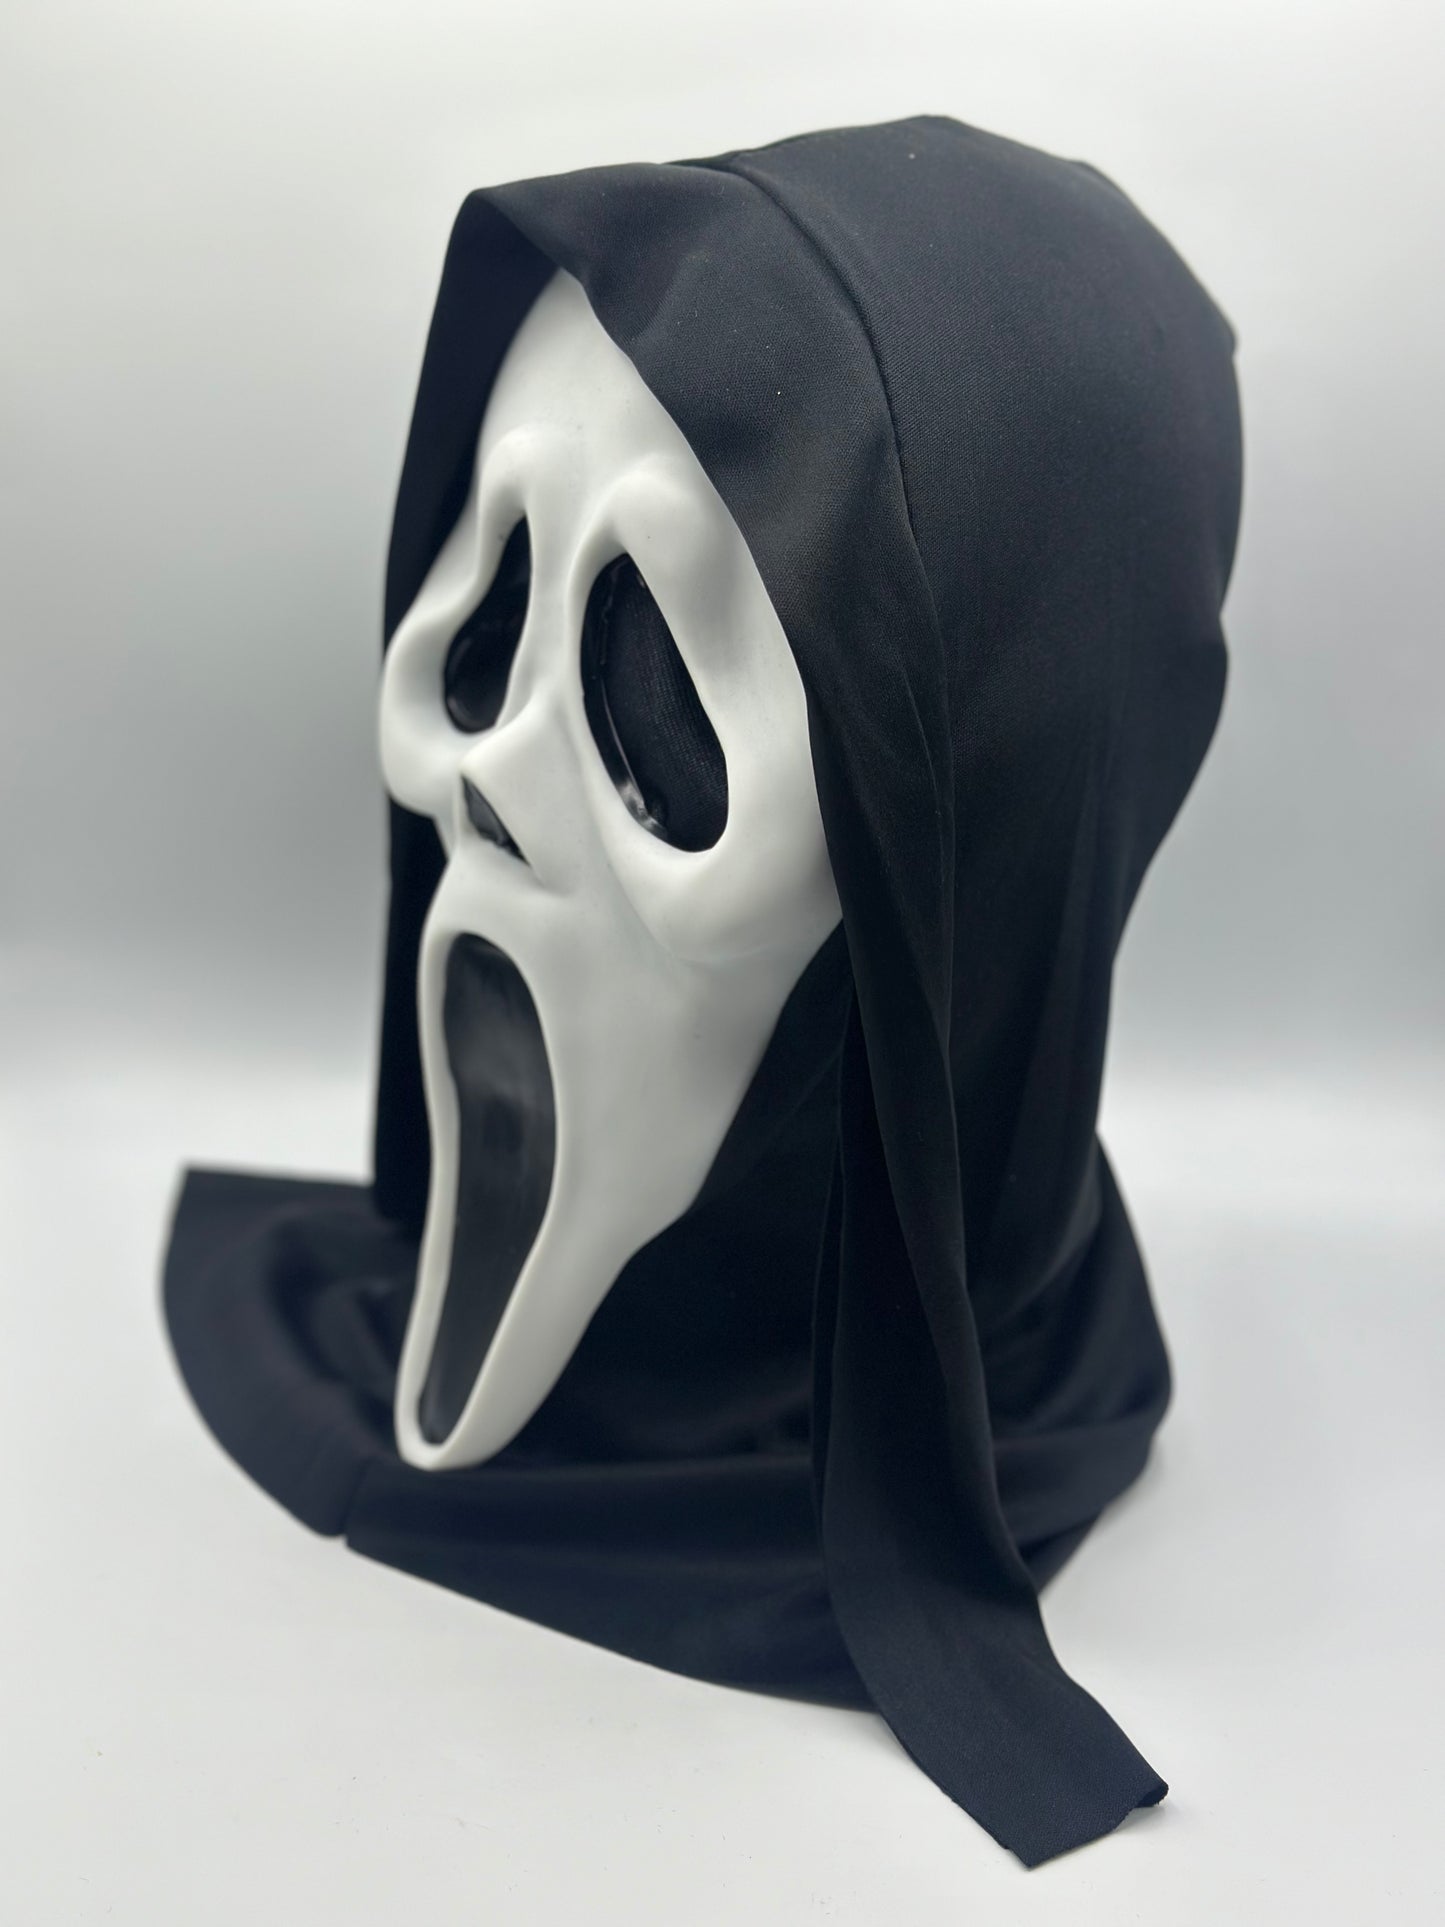 Scream masker, Ghostface masker uit de scream film